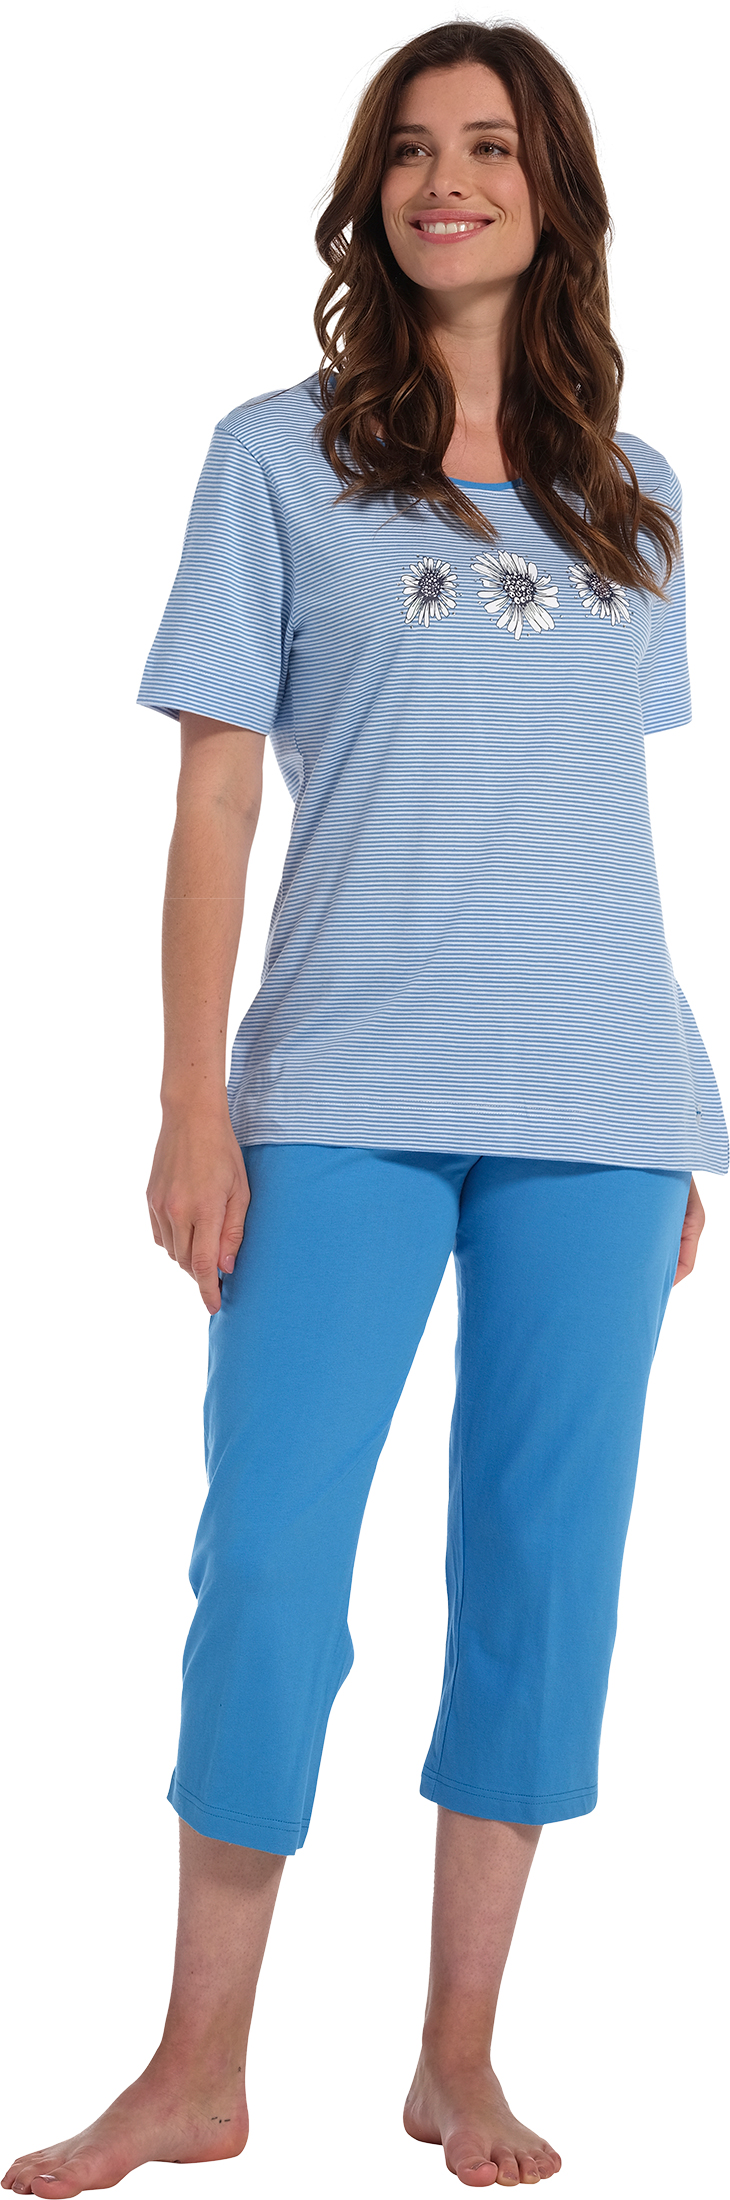 Pastunette dames pyjama capri 20231-130-2 - Blauw - 48